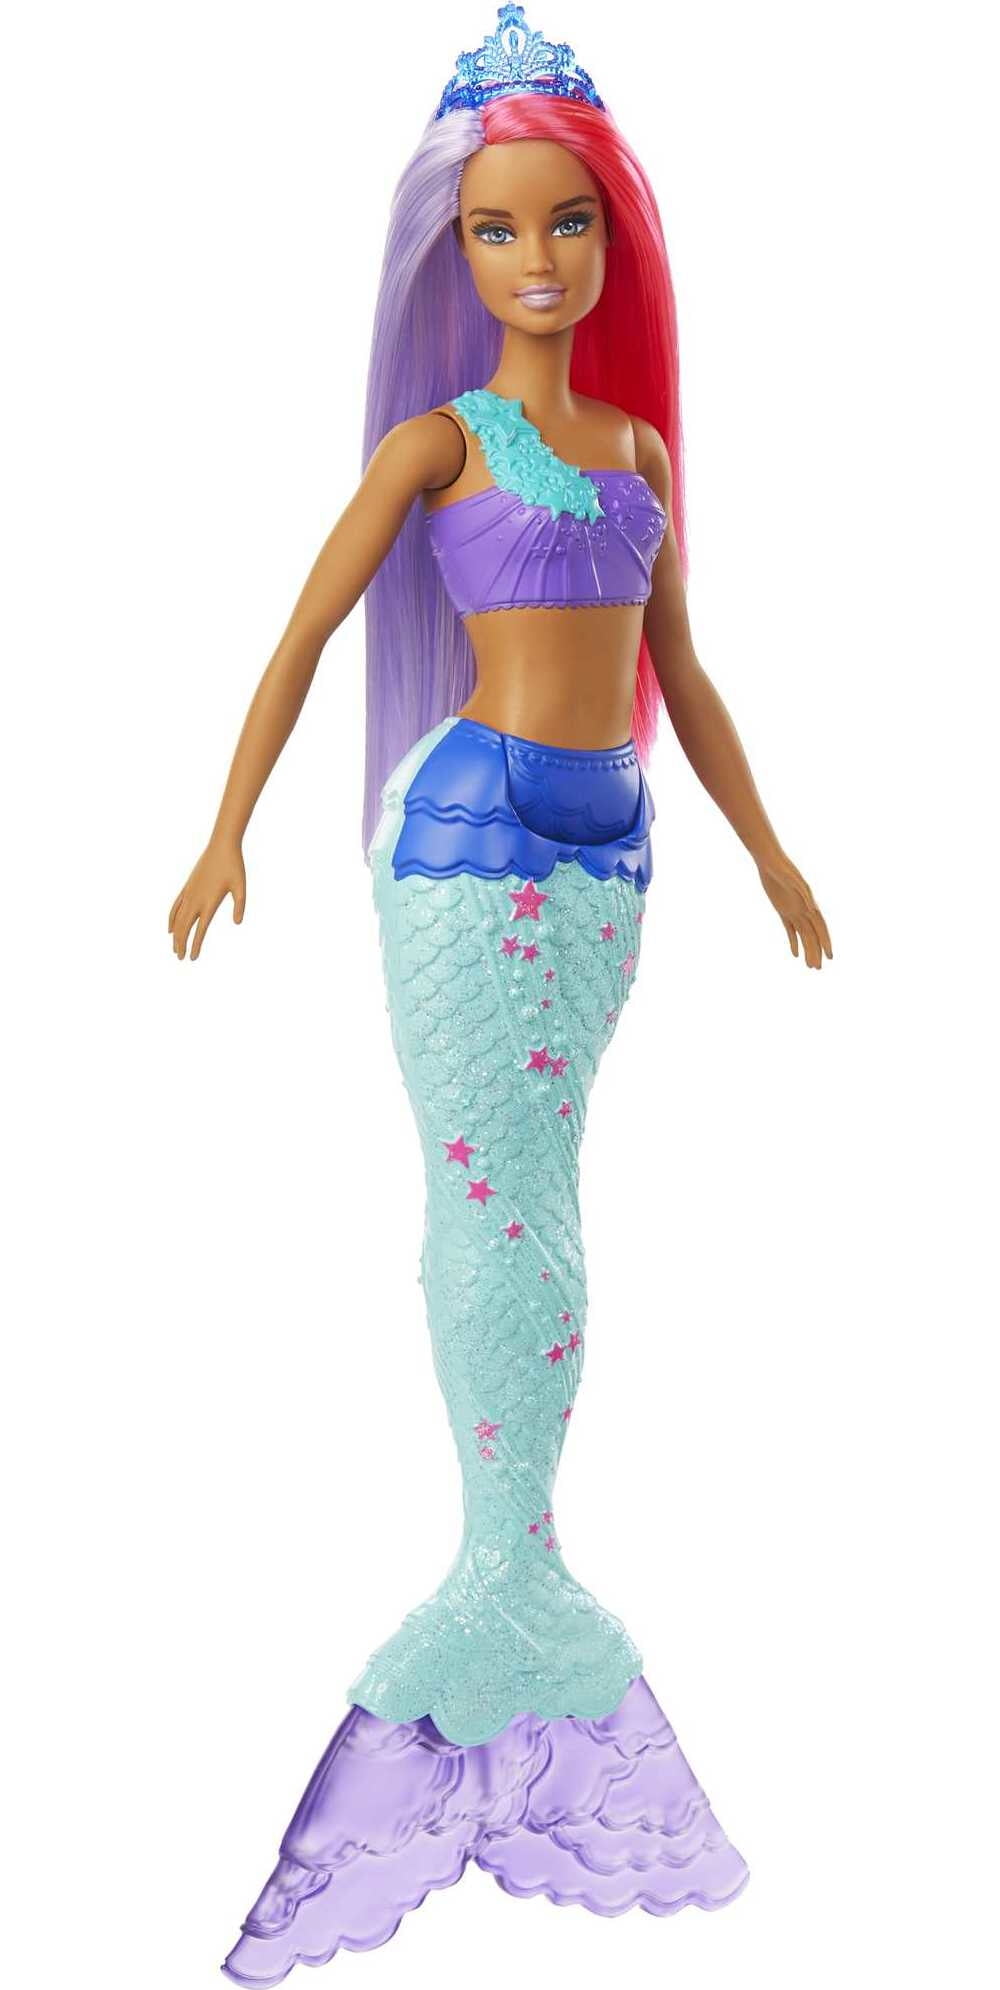 Barbie Dreamtopia Mermaid Doll, 12-inch, Pink and Purple Hair - Walmart.com